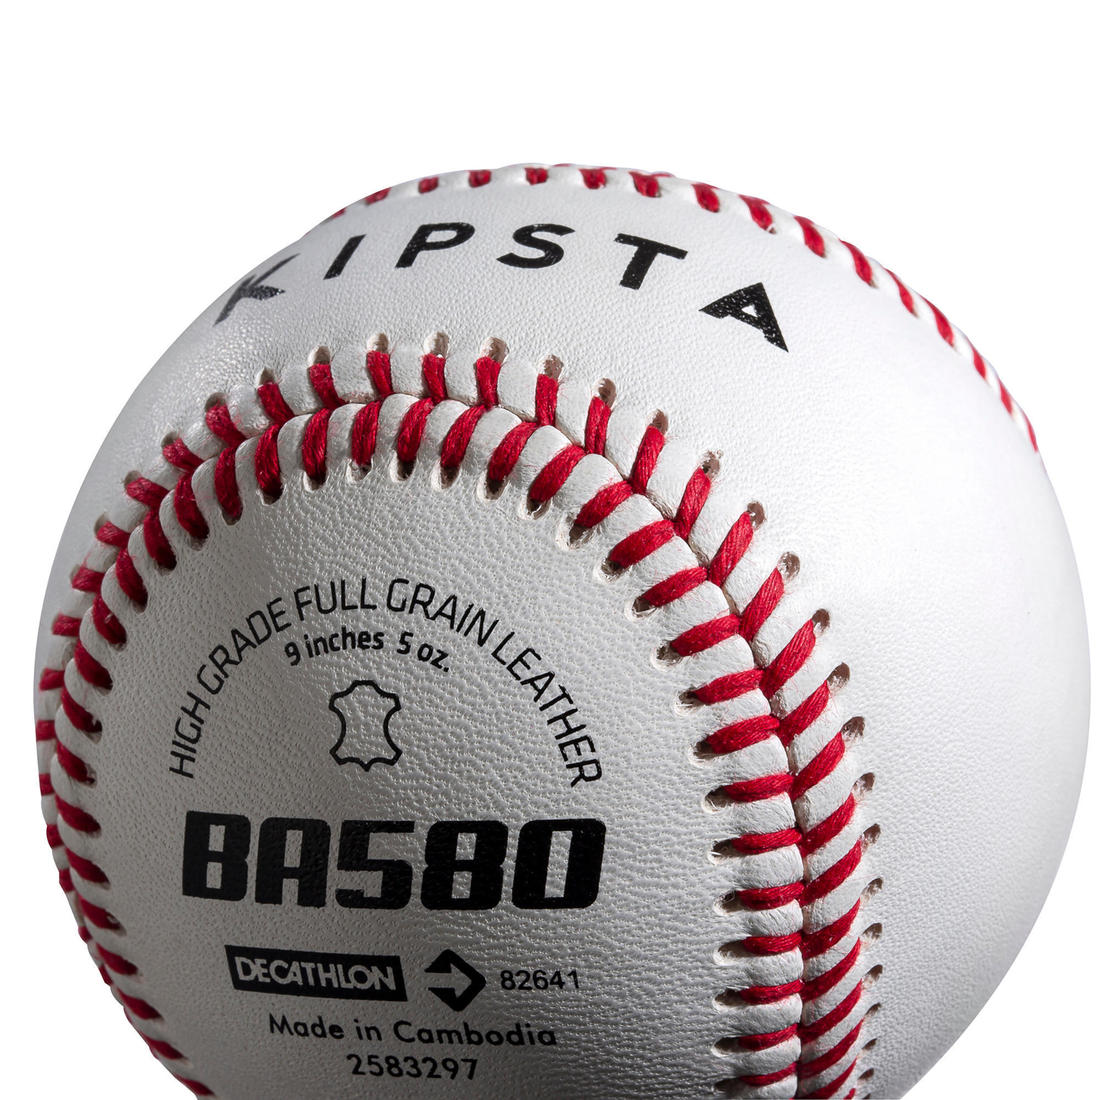 KIPSTA (キプスタ) 野球 ボール BA550